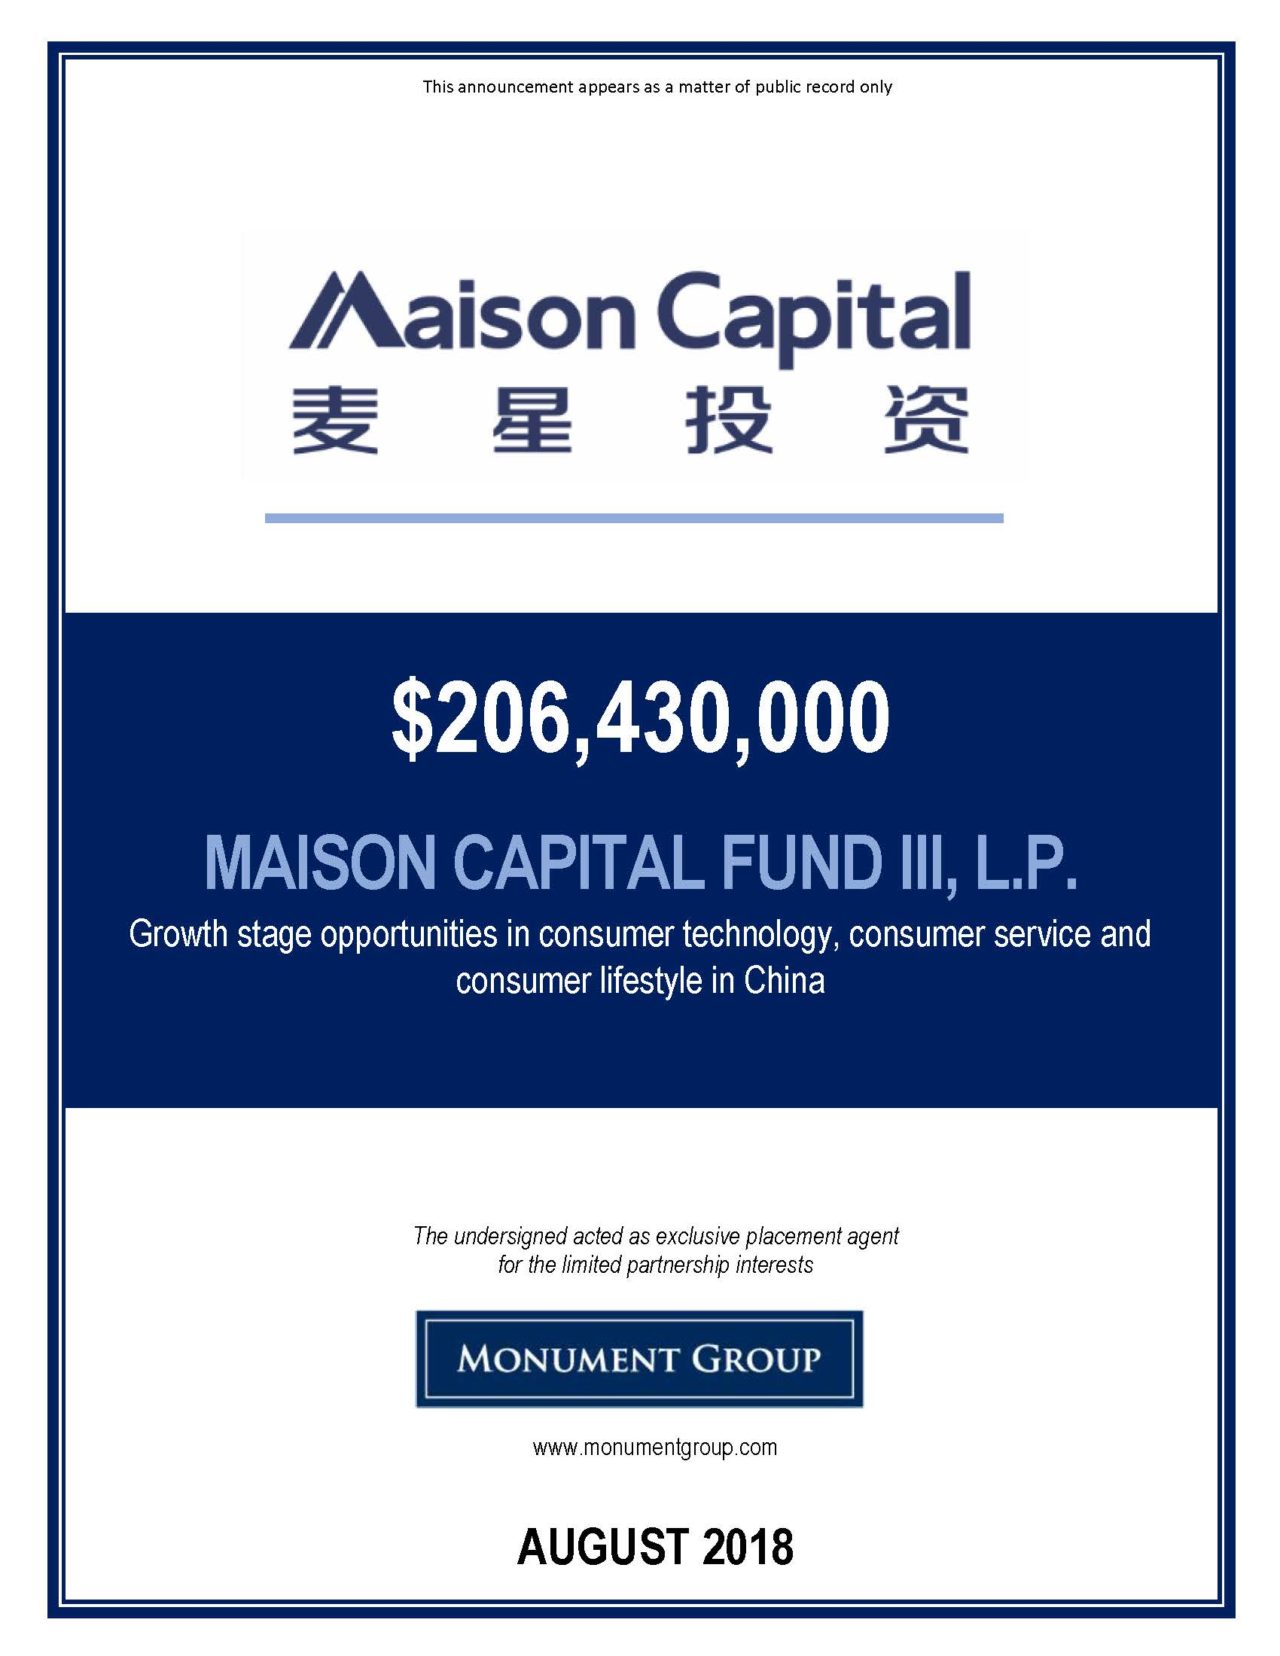 Maison Capital Fund III